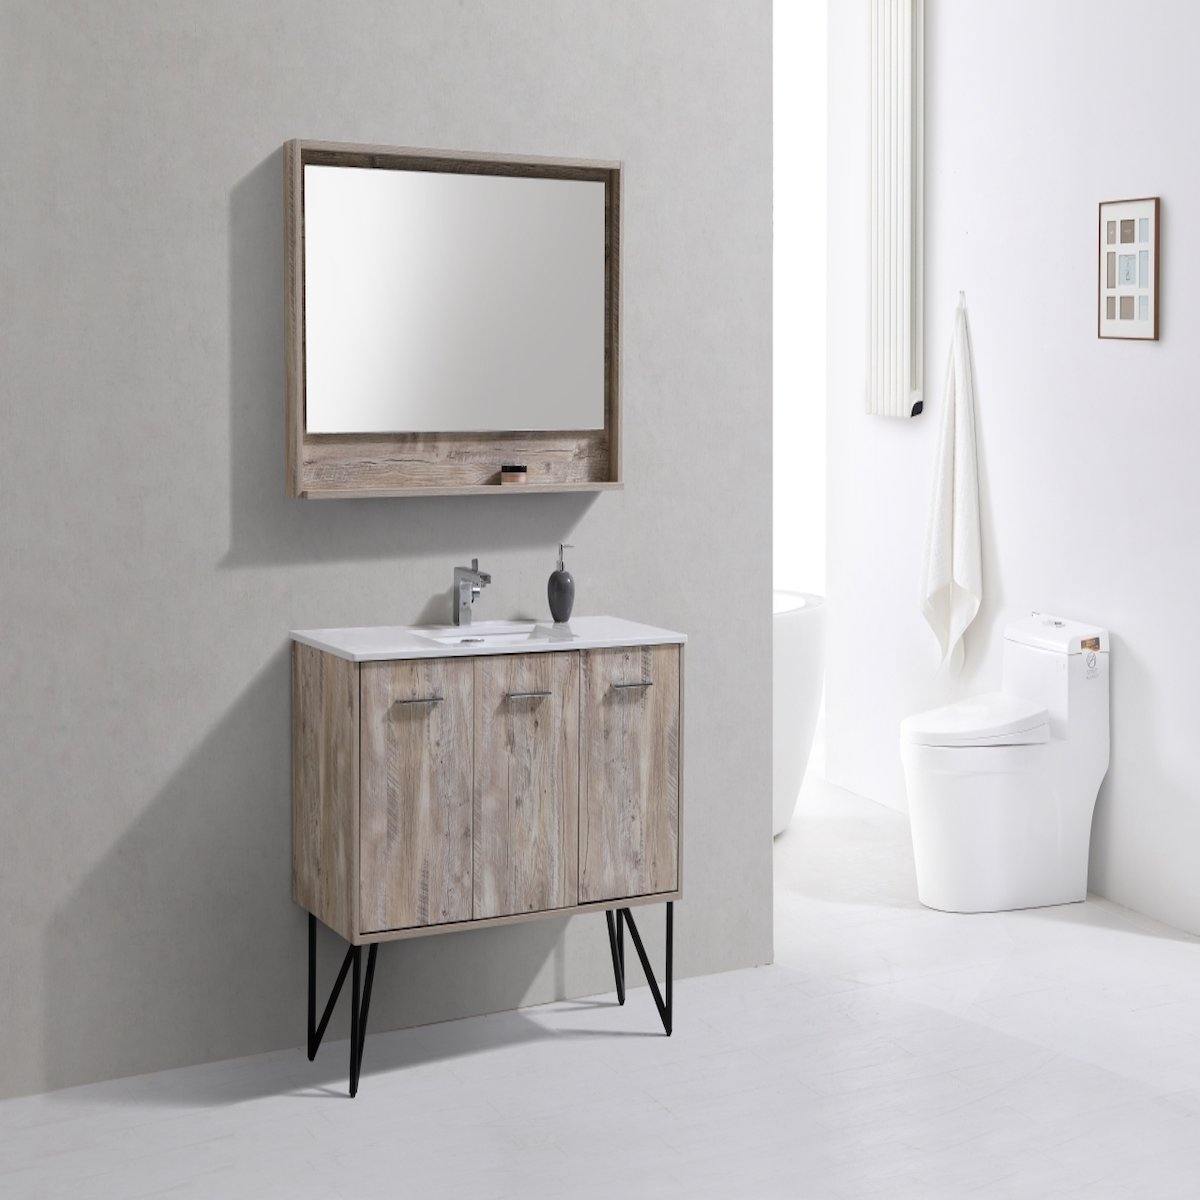 KubeBath Bosco 48" Nature Wood Freestanding Single Vanity with Quartz Countertop KB48-NW in Bathroom #finish_nature wood